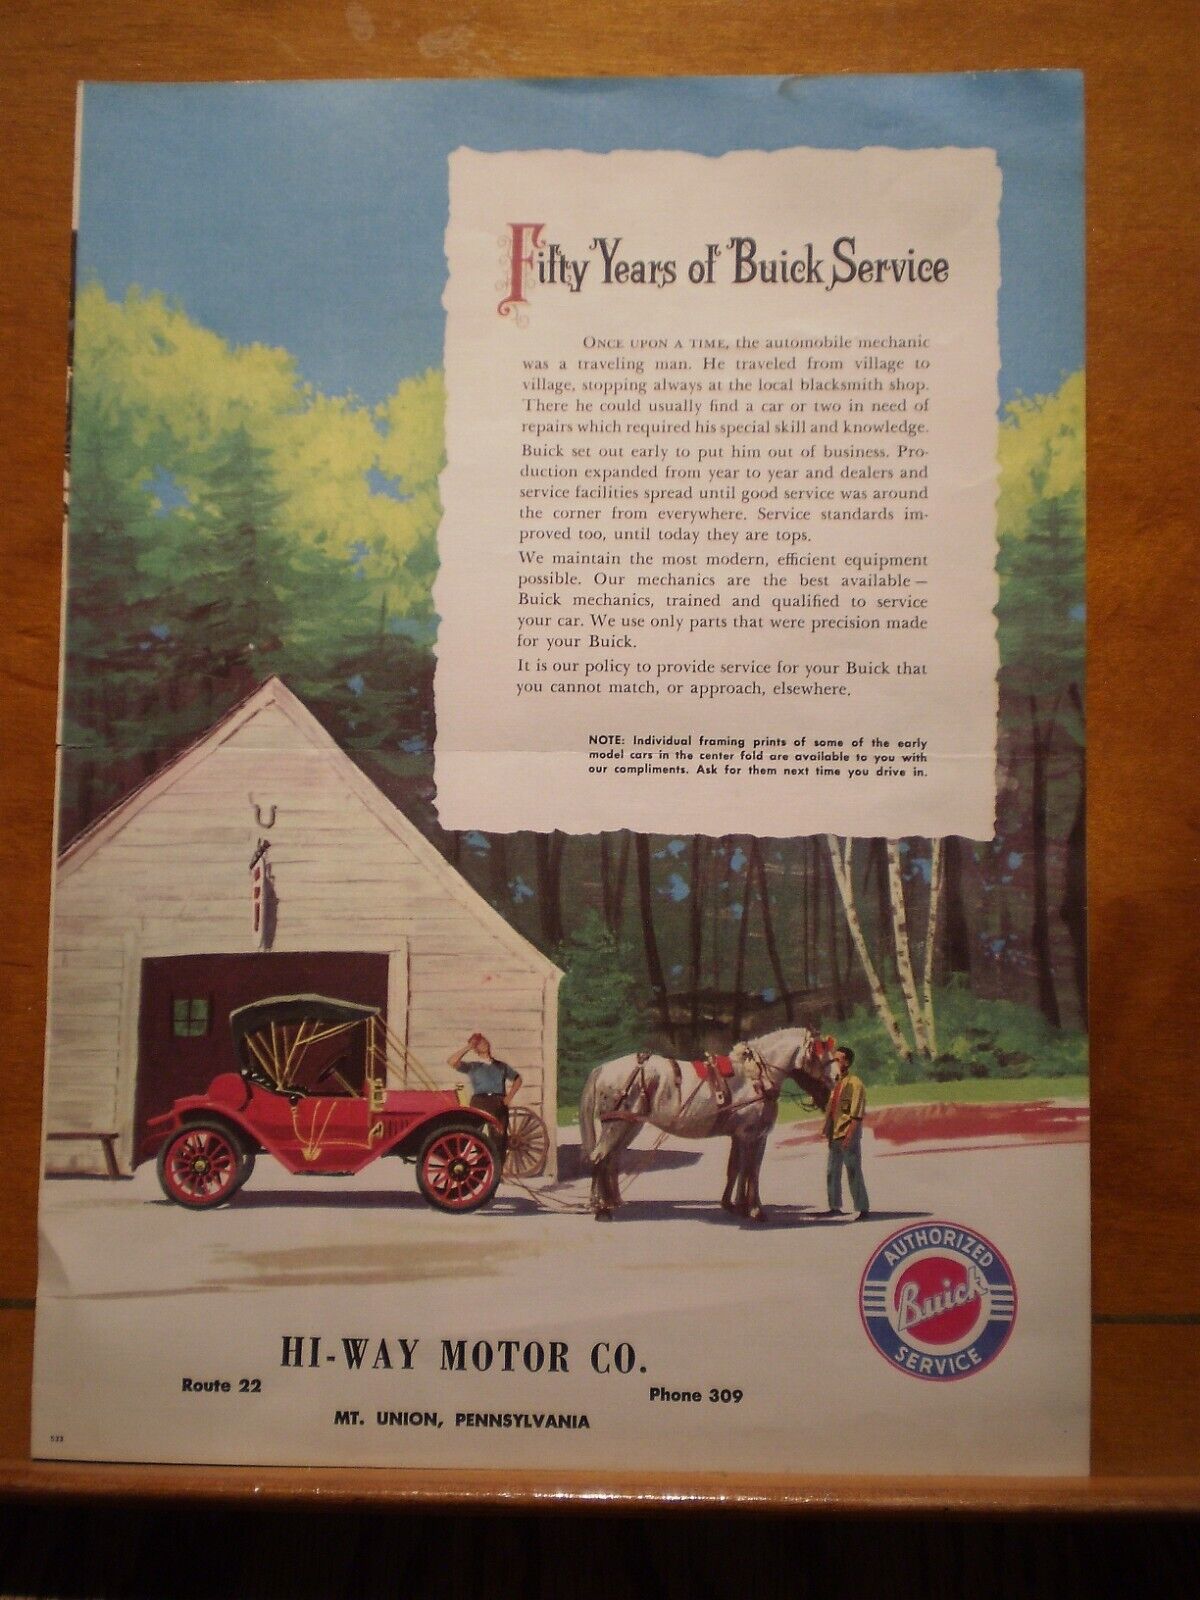 Hi-Way Motor Co  Mount Union,Pa  Huntingdon County  Buick advertisement paper